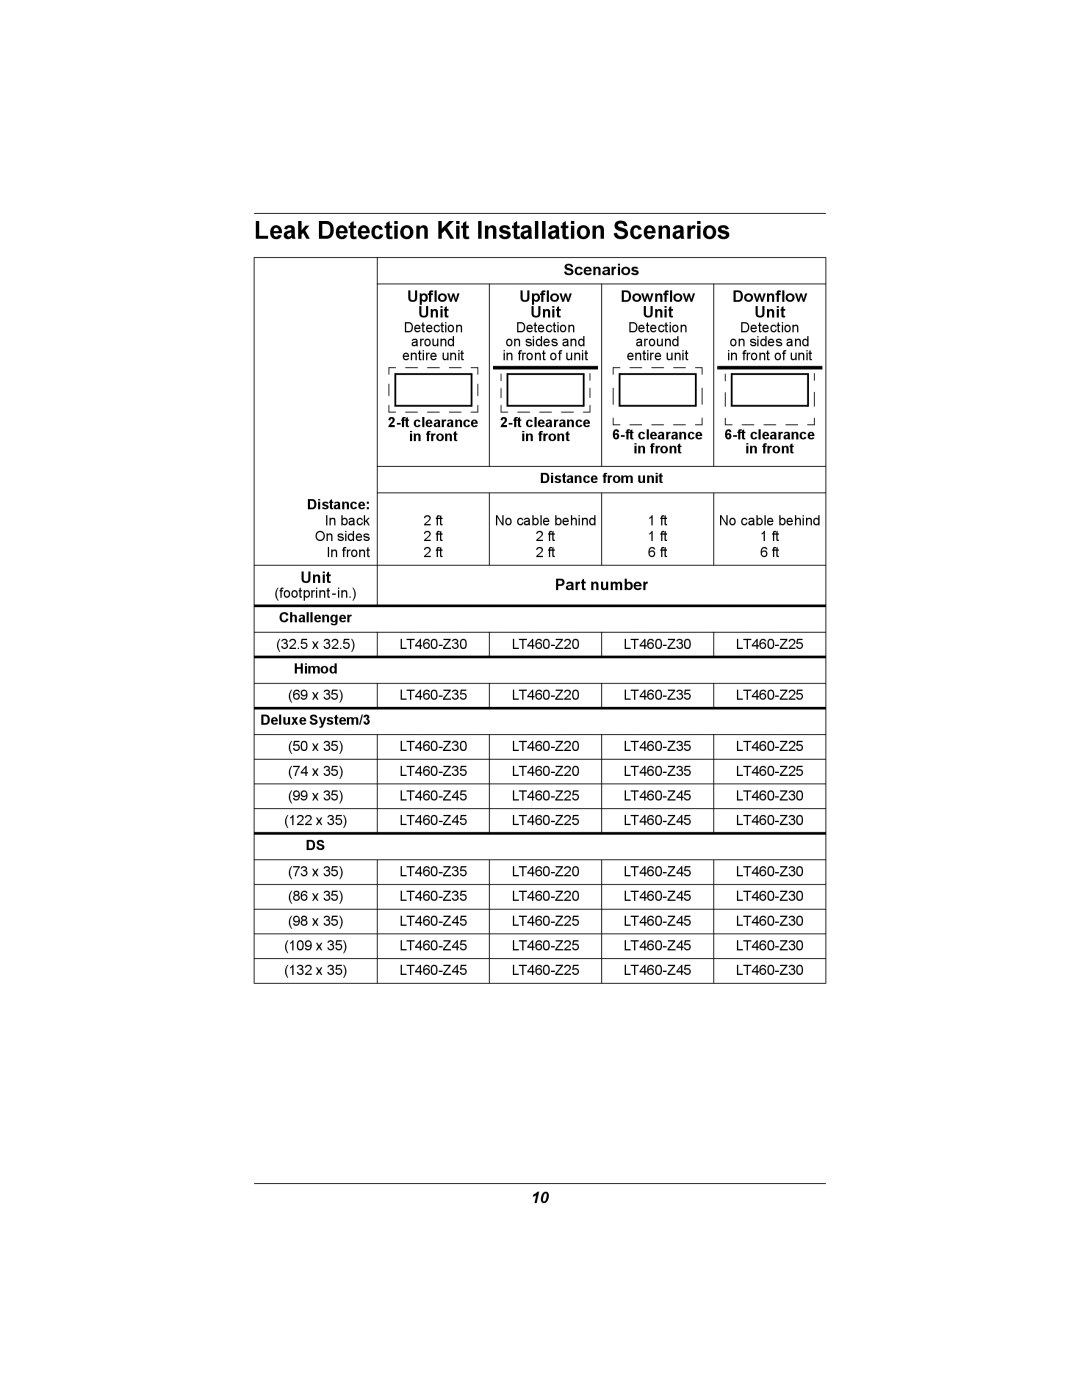 Emerson 460 installation manual Leak Detection Kit Installation Scenarios 